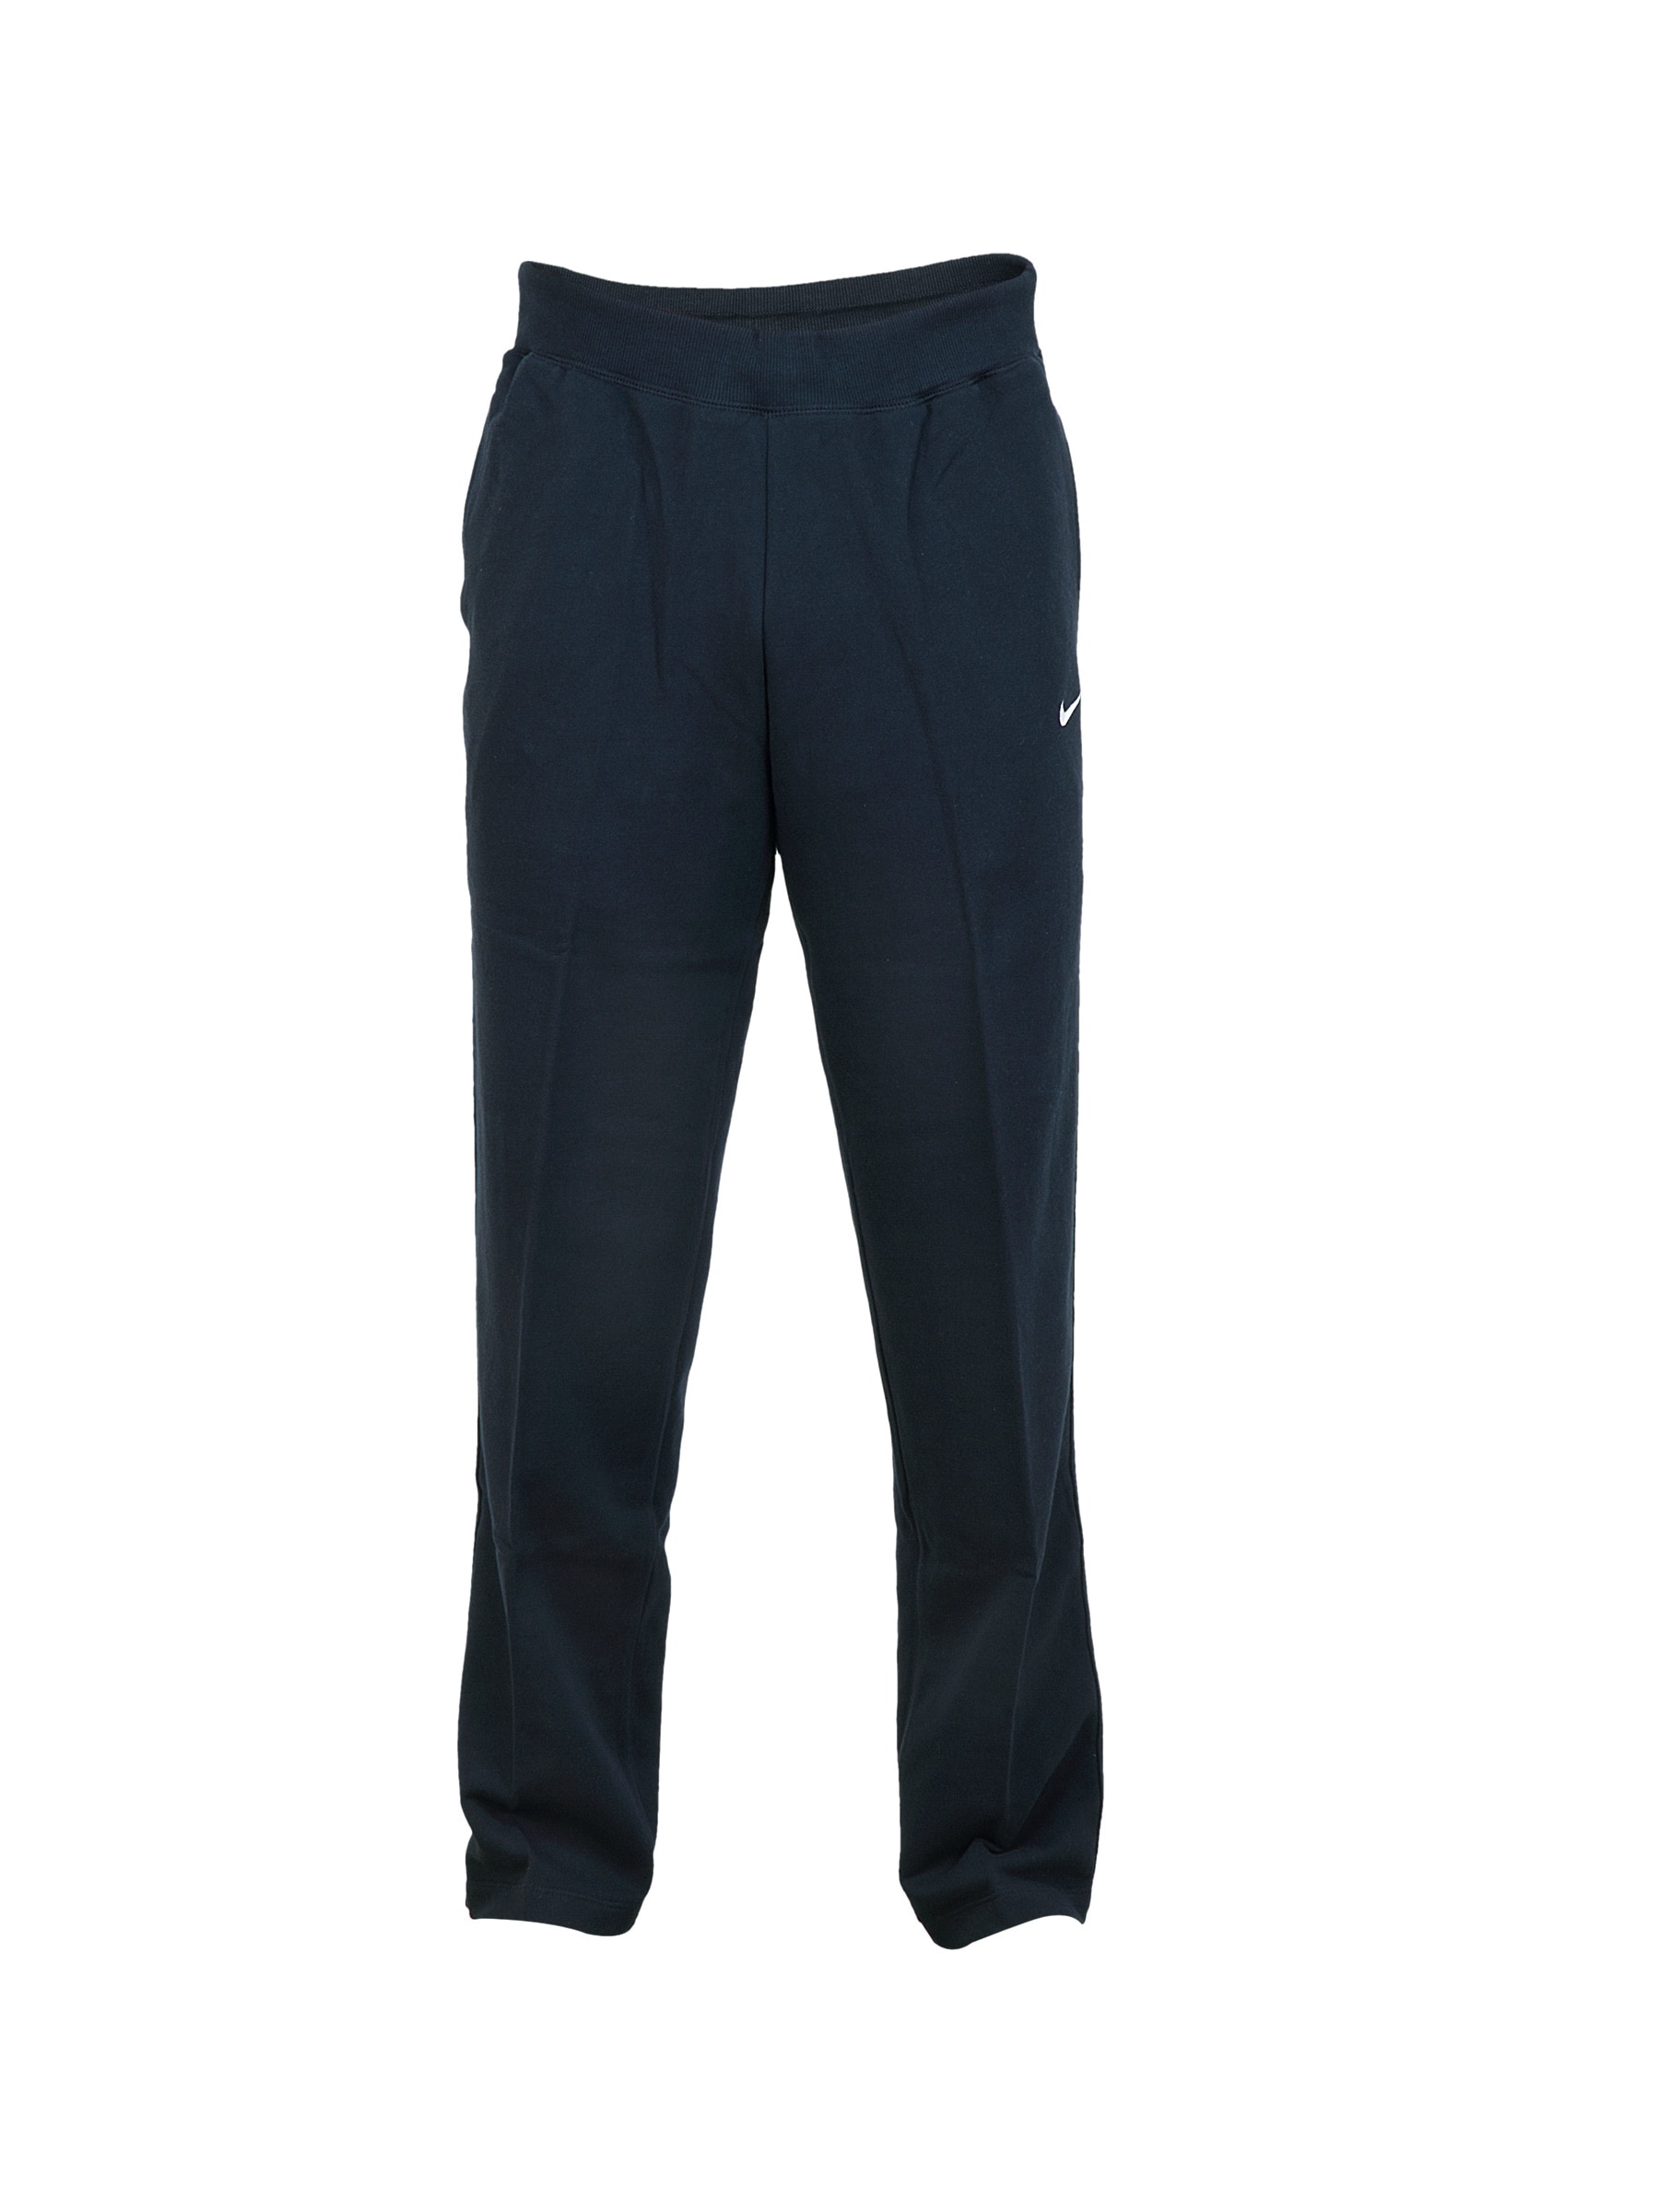 Nike Men Casual Navy Blue Track Pant